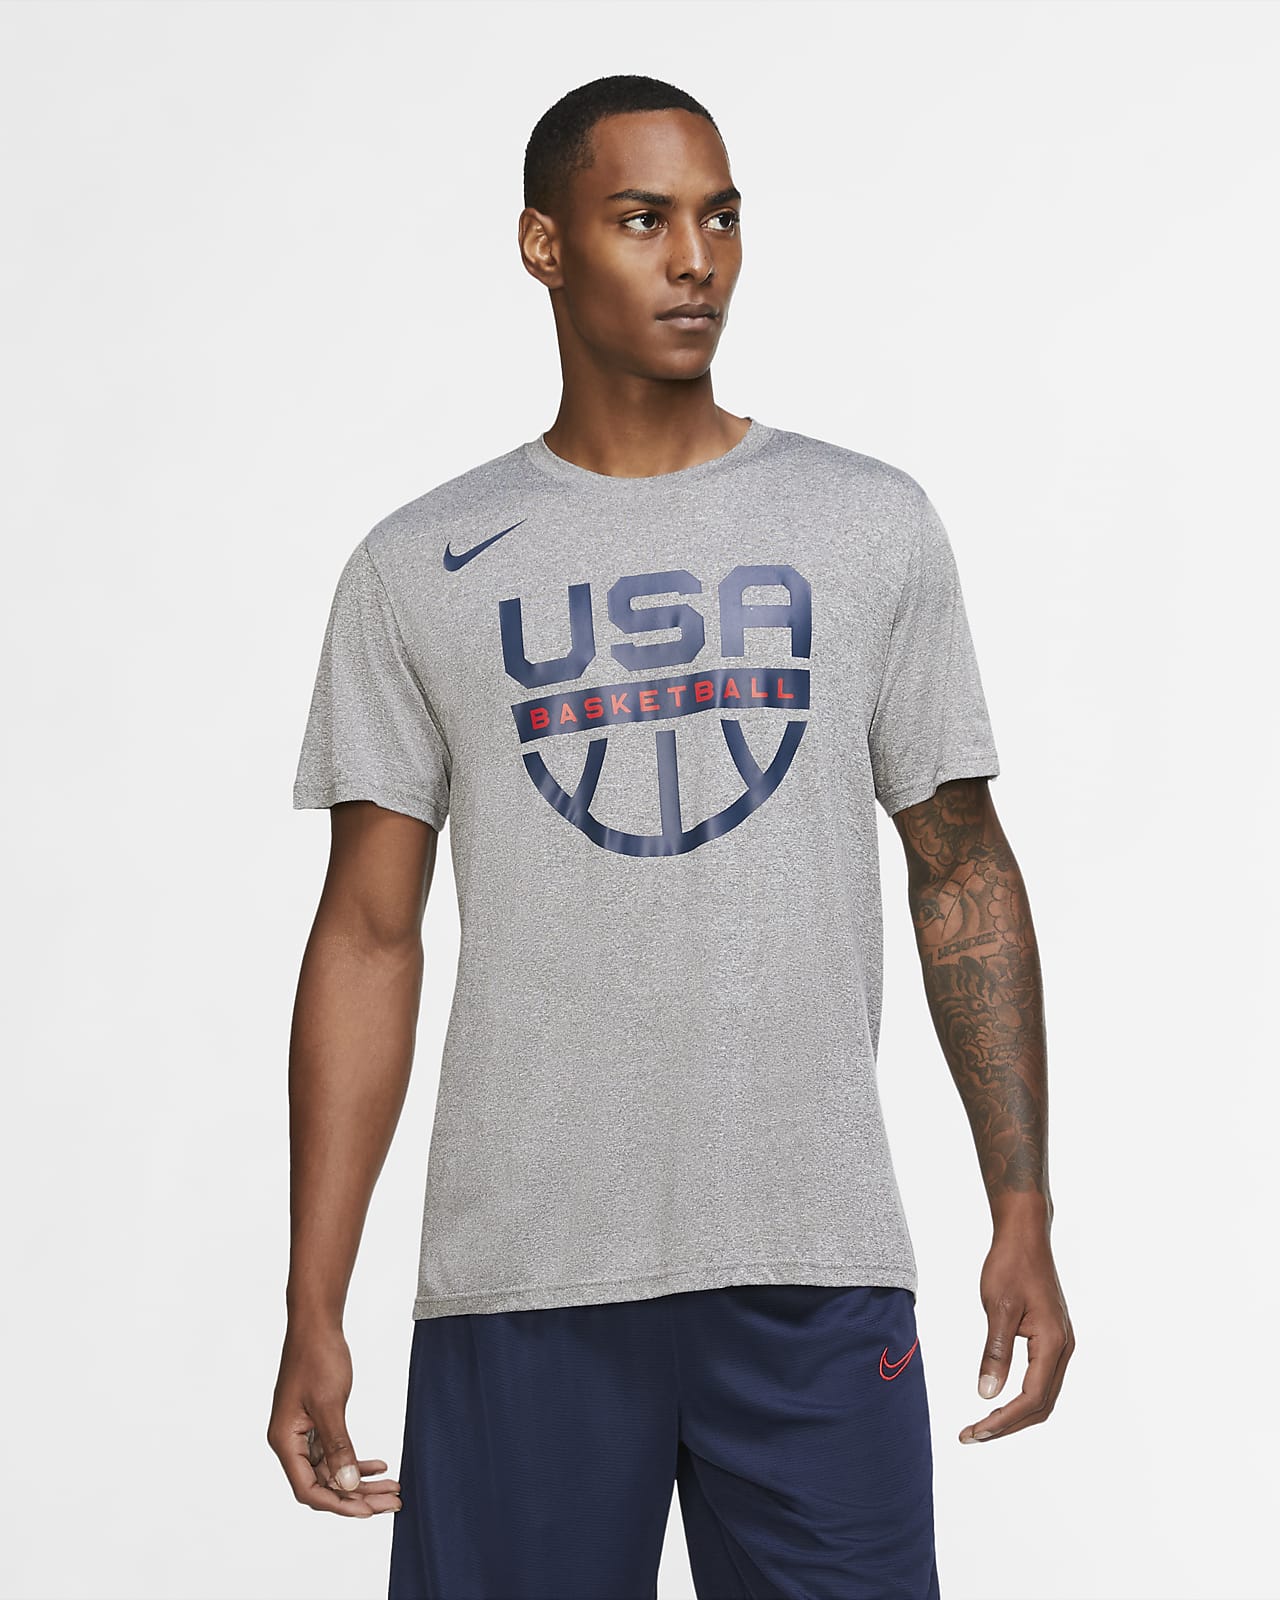 Nike公式 Usab ナイキ Dri Fit メンズ バスケットボール プラクティス Tシャツ オンラインストア 通販サイト